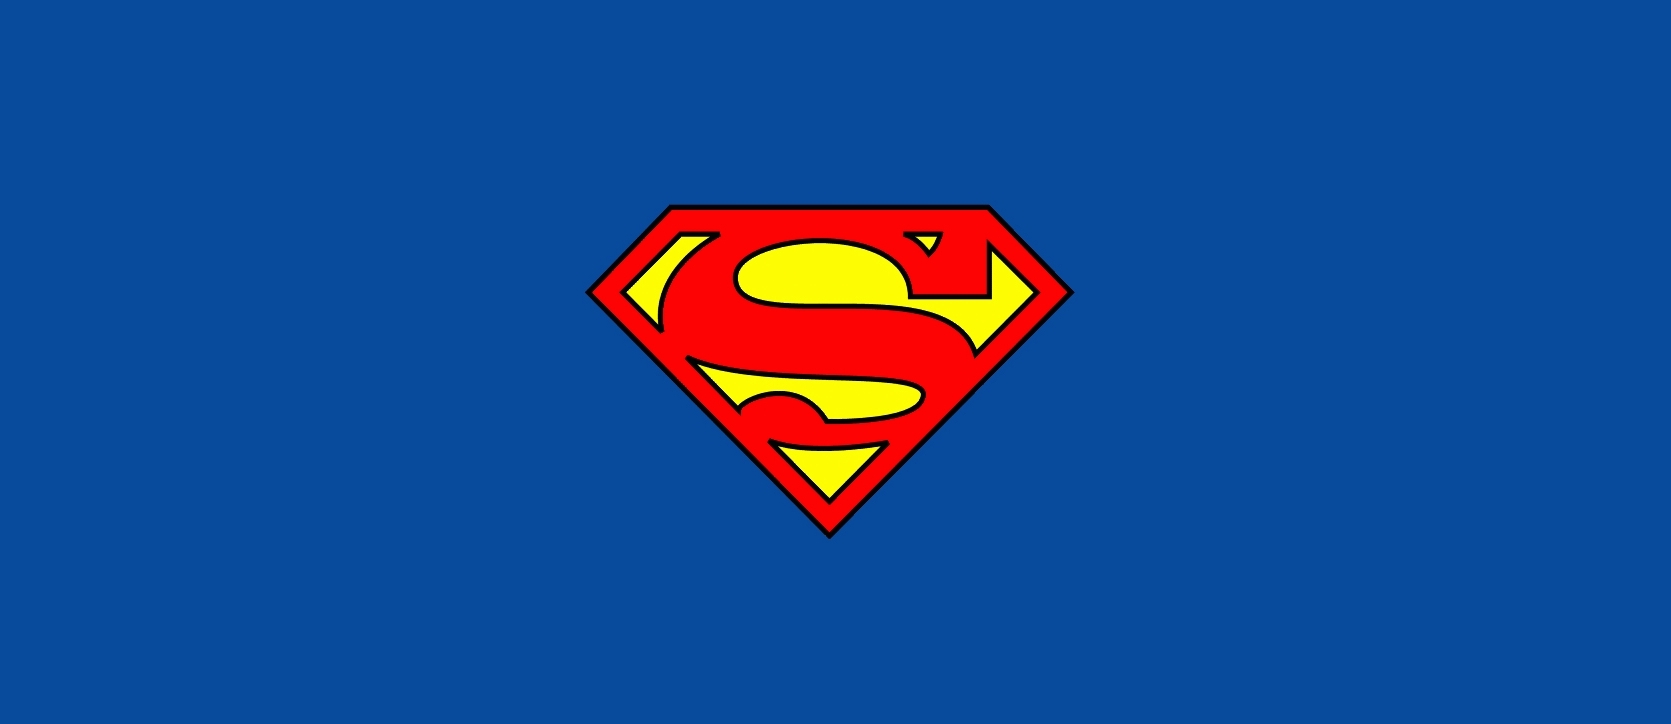 fond d'écran logo superman,superman,personnage fictif,super héros,ligue de justice,symbole